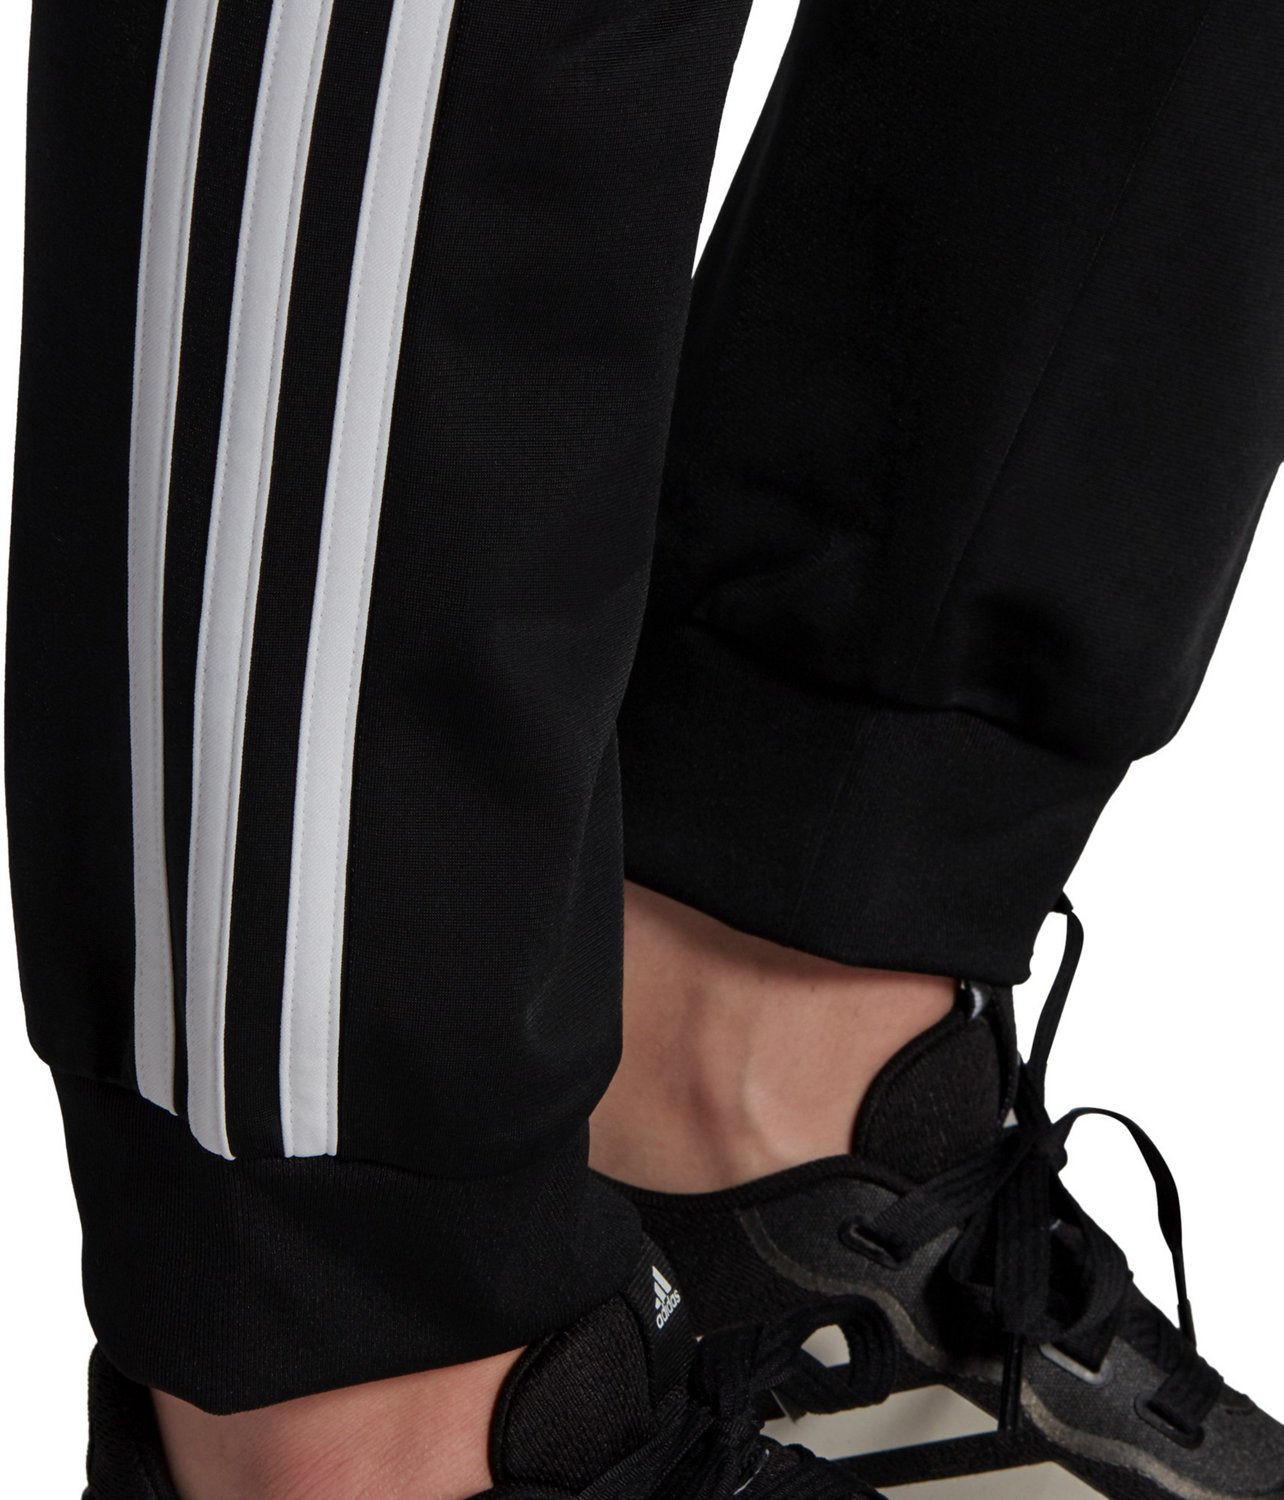 Adidas Girl's Warm Up Tricot Pants - Black (AK4450) • Price »